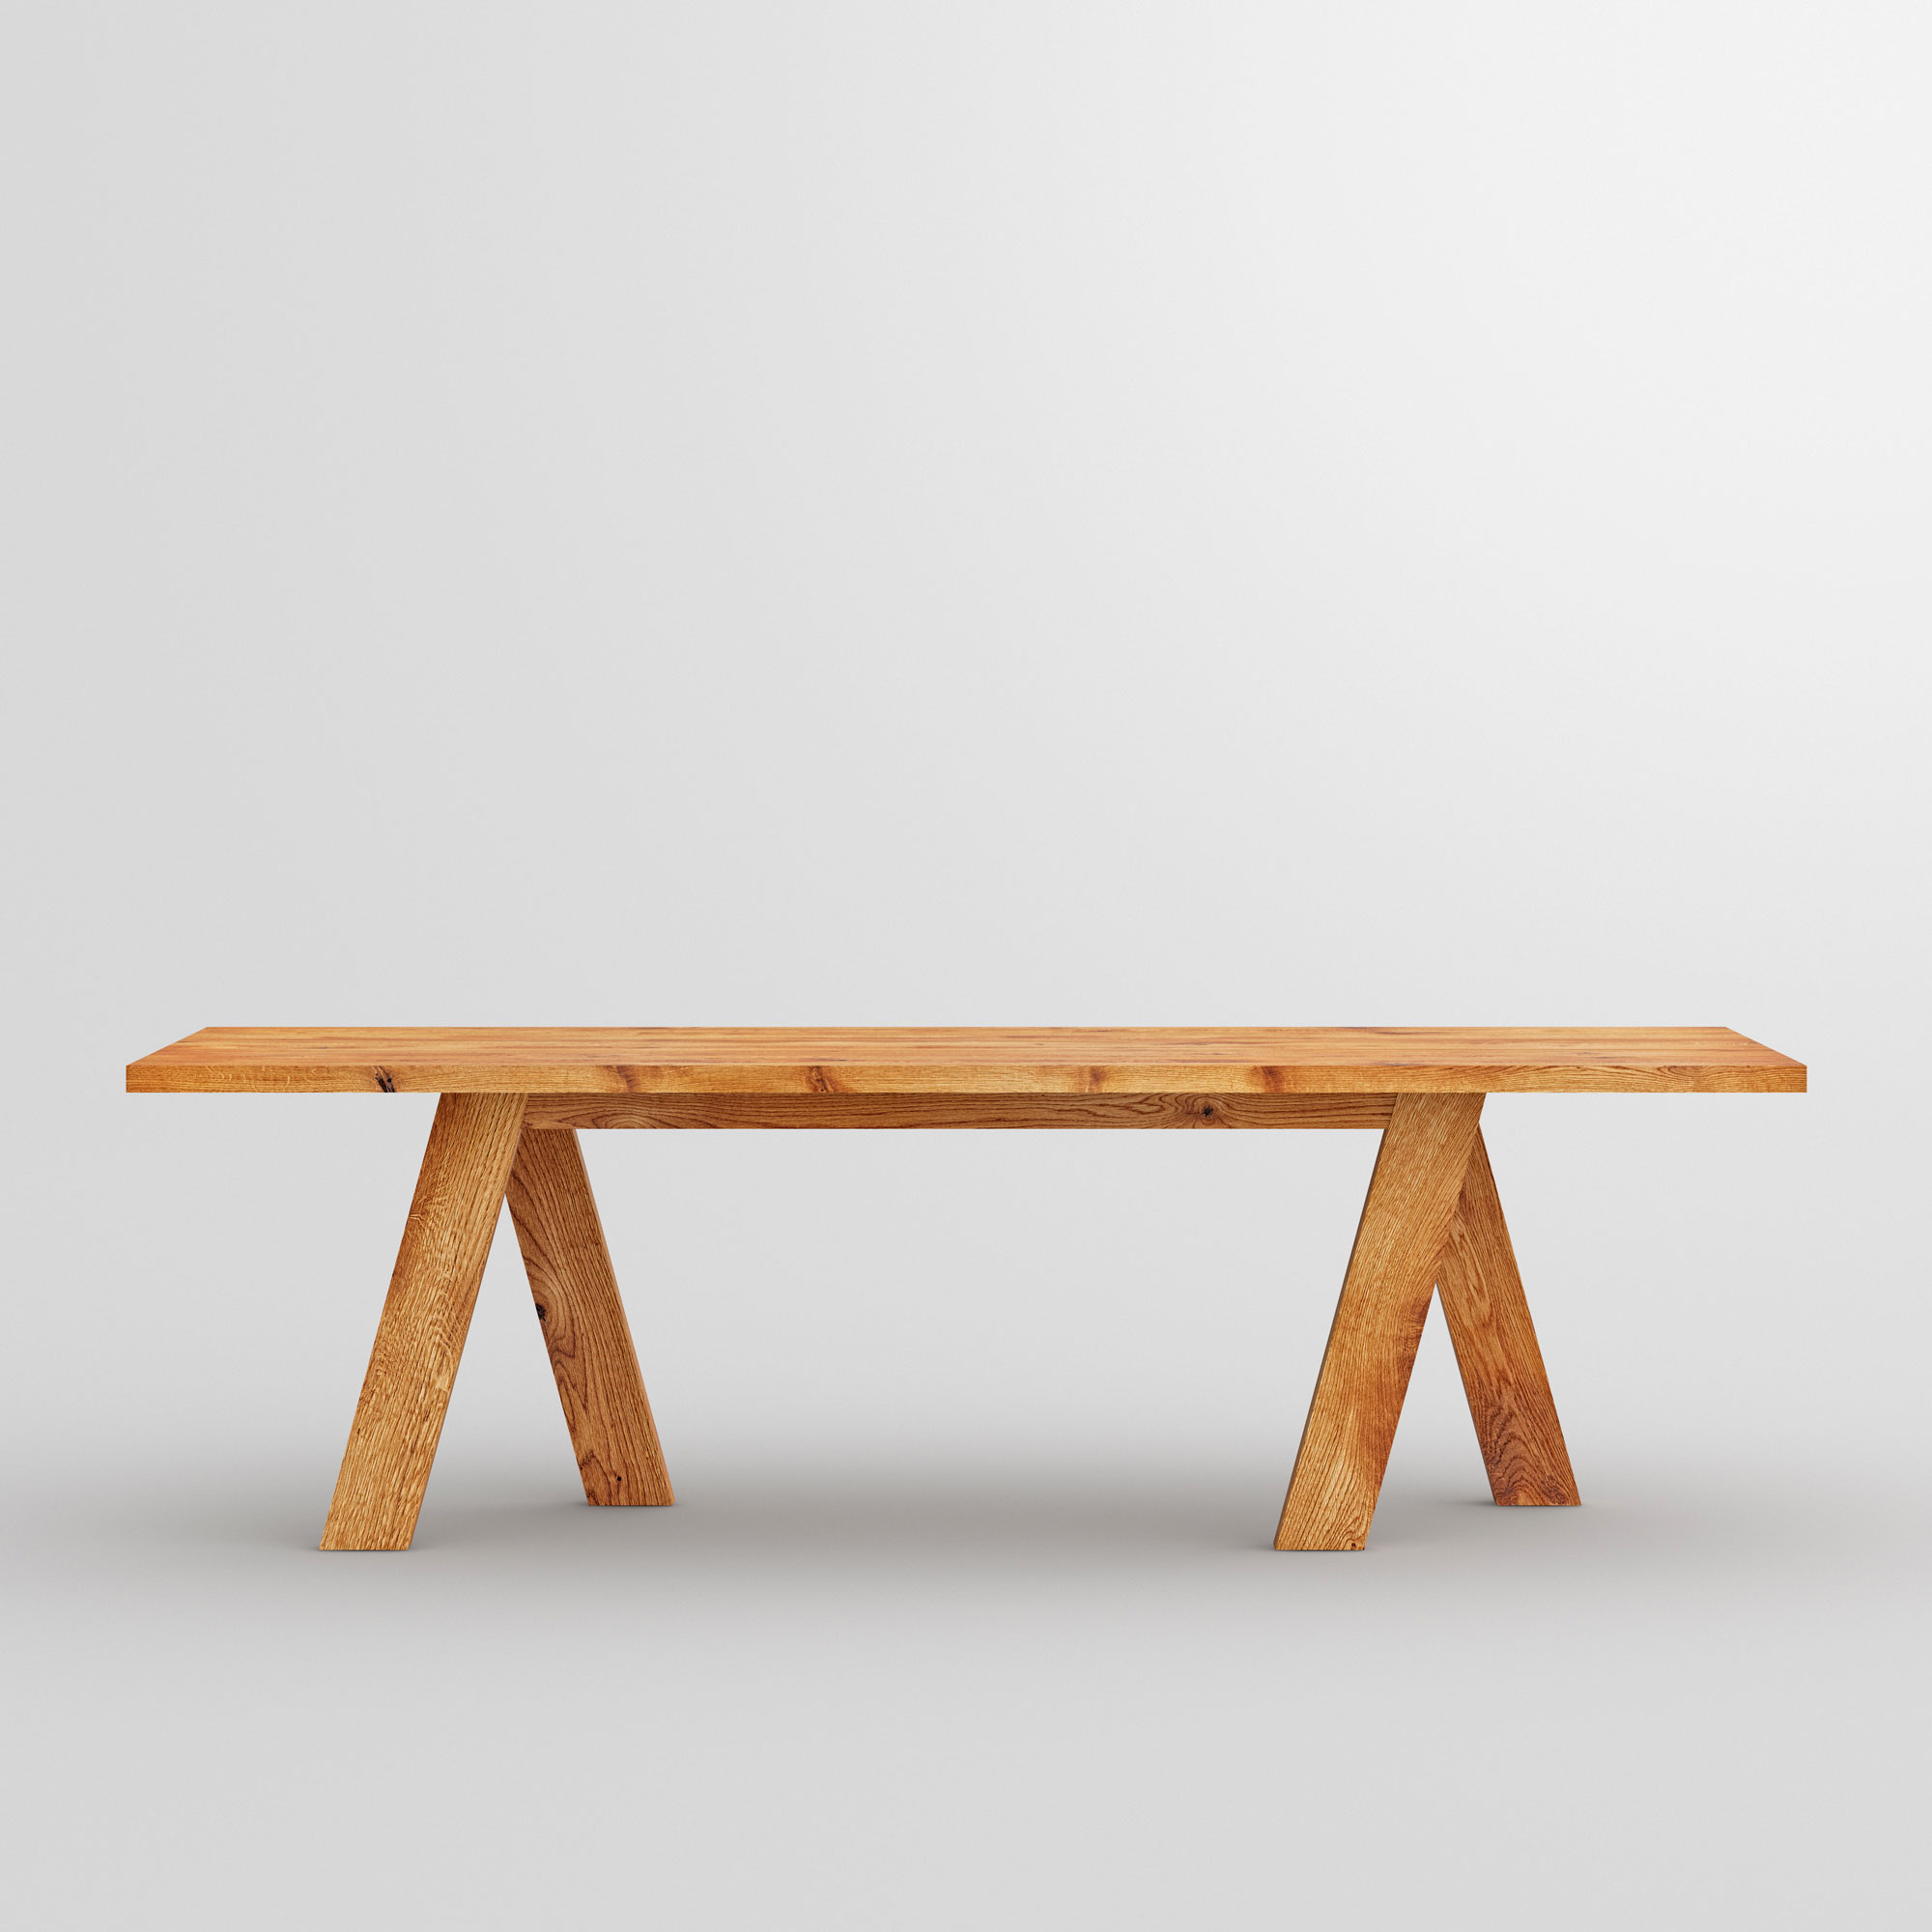 Unique Designer Table GO cam2 custom made in solid wood by vitamin design